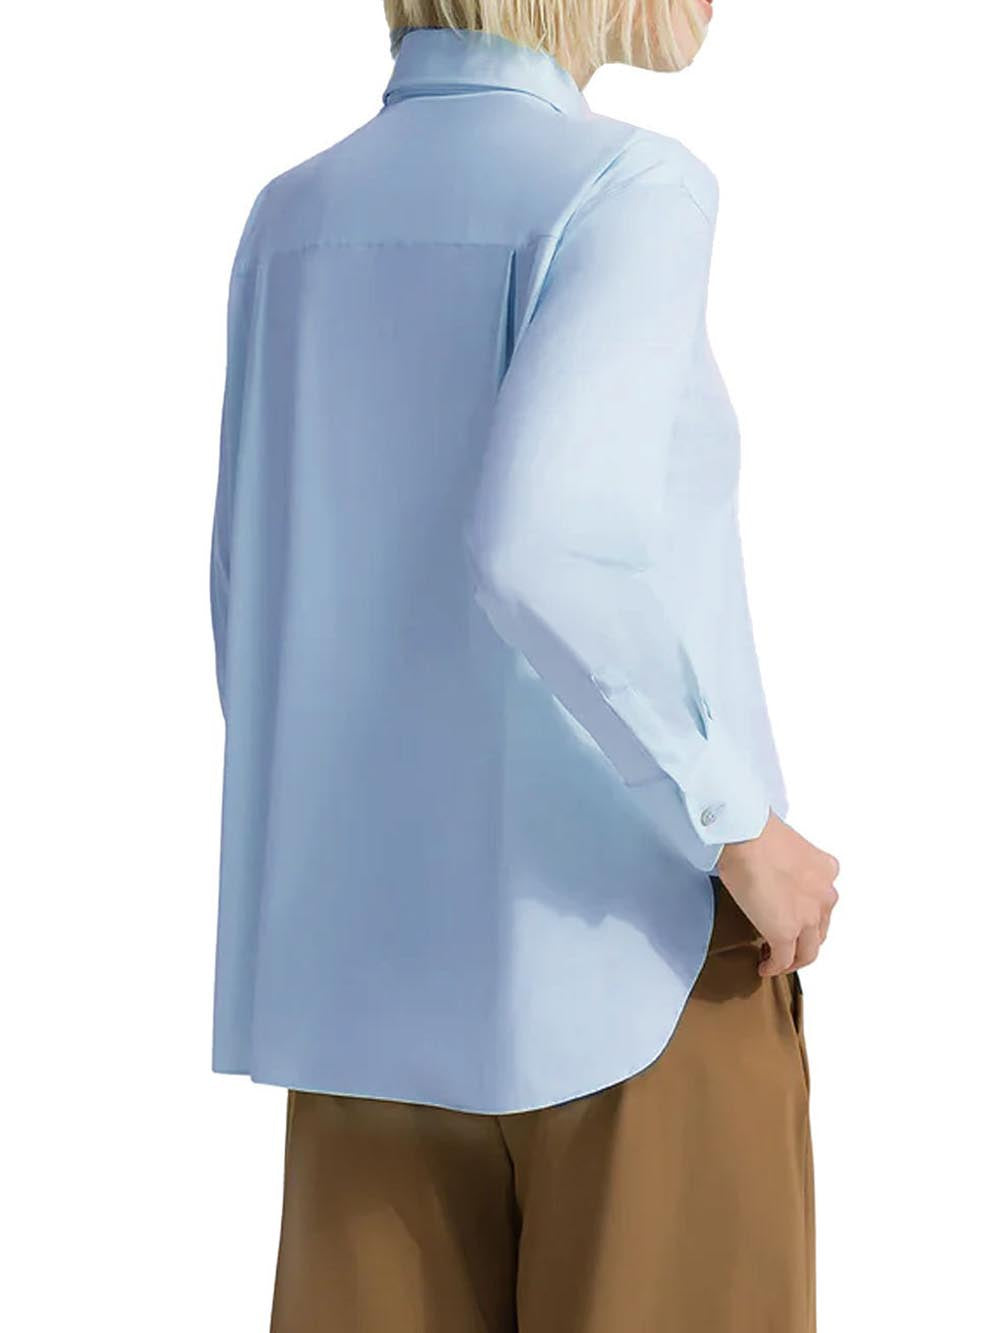 RRD Roberto Ricci Designs Camicia Donna Oxford Boyfriend Wom Shirt Celeste